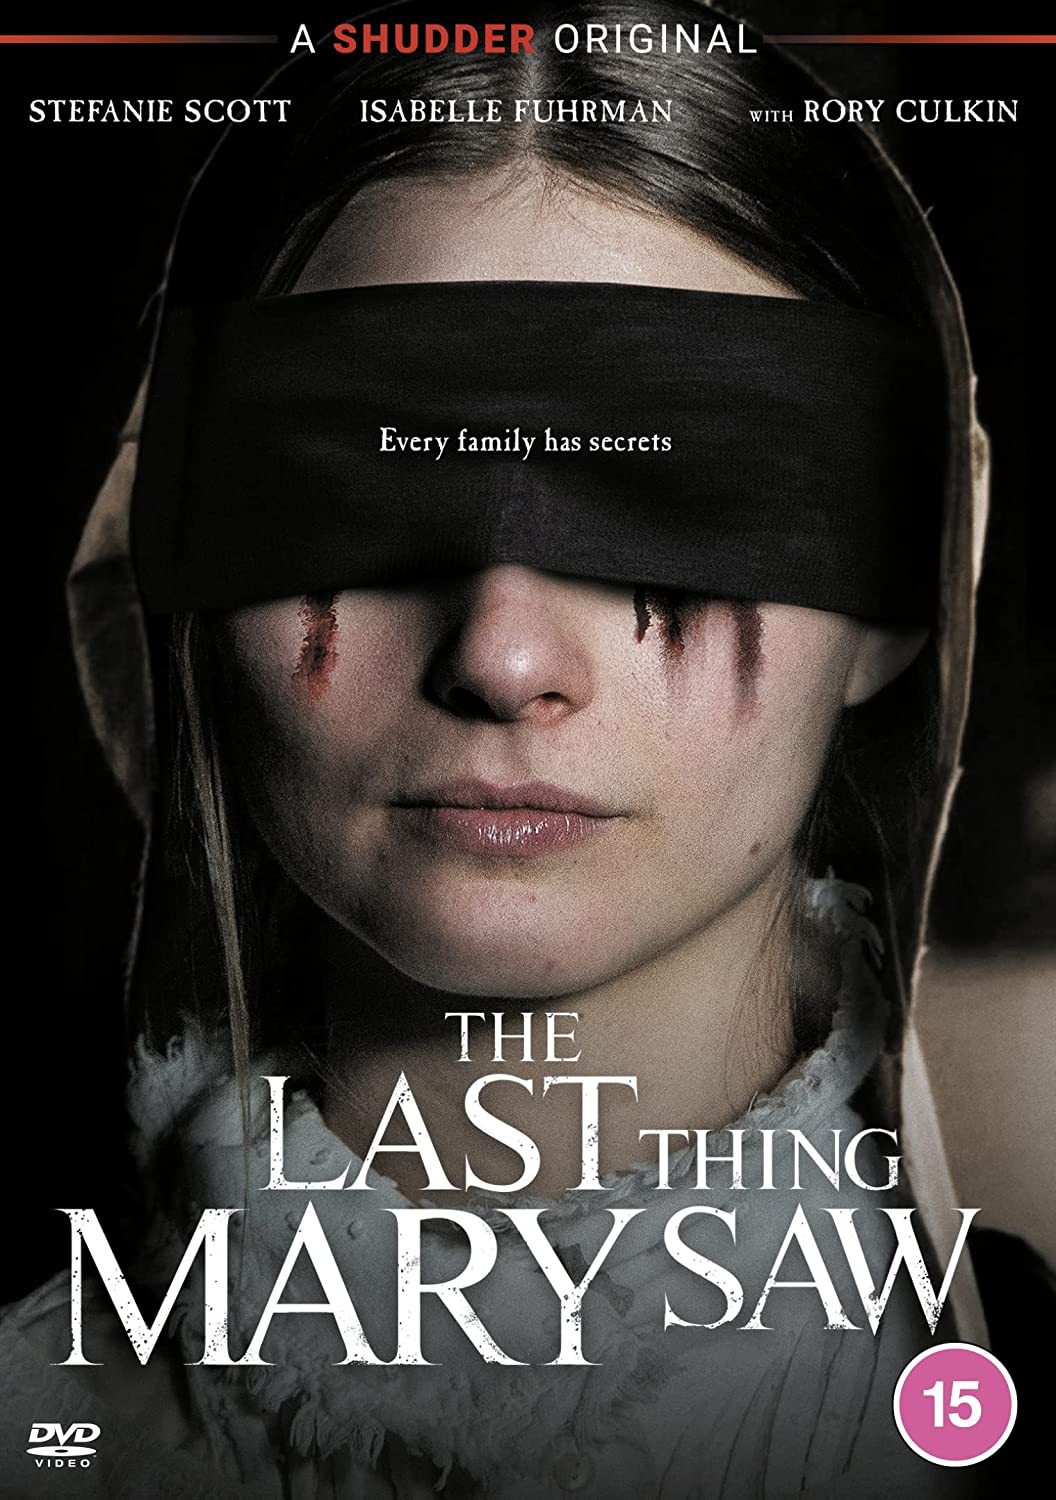 Gagnez l'original de Shudder "The Last Thing Mary Saw" en DVD 4